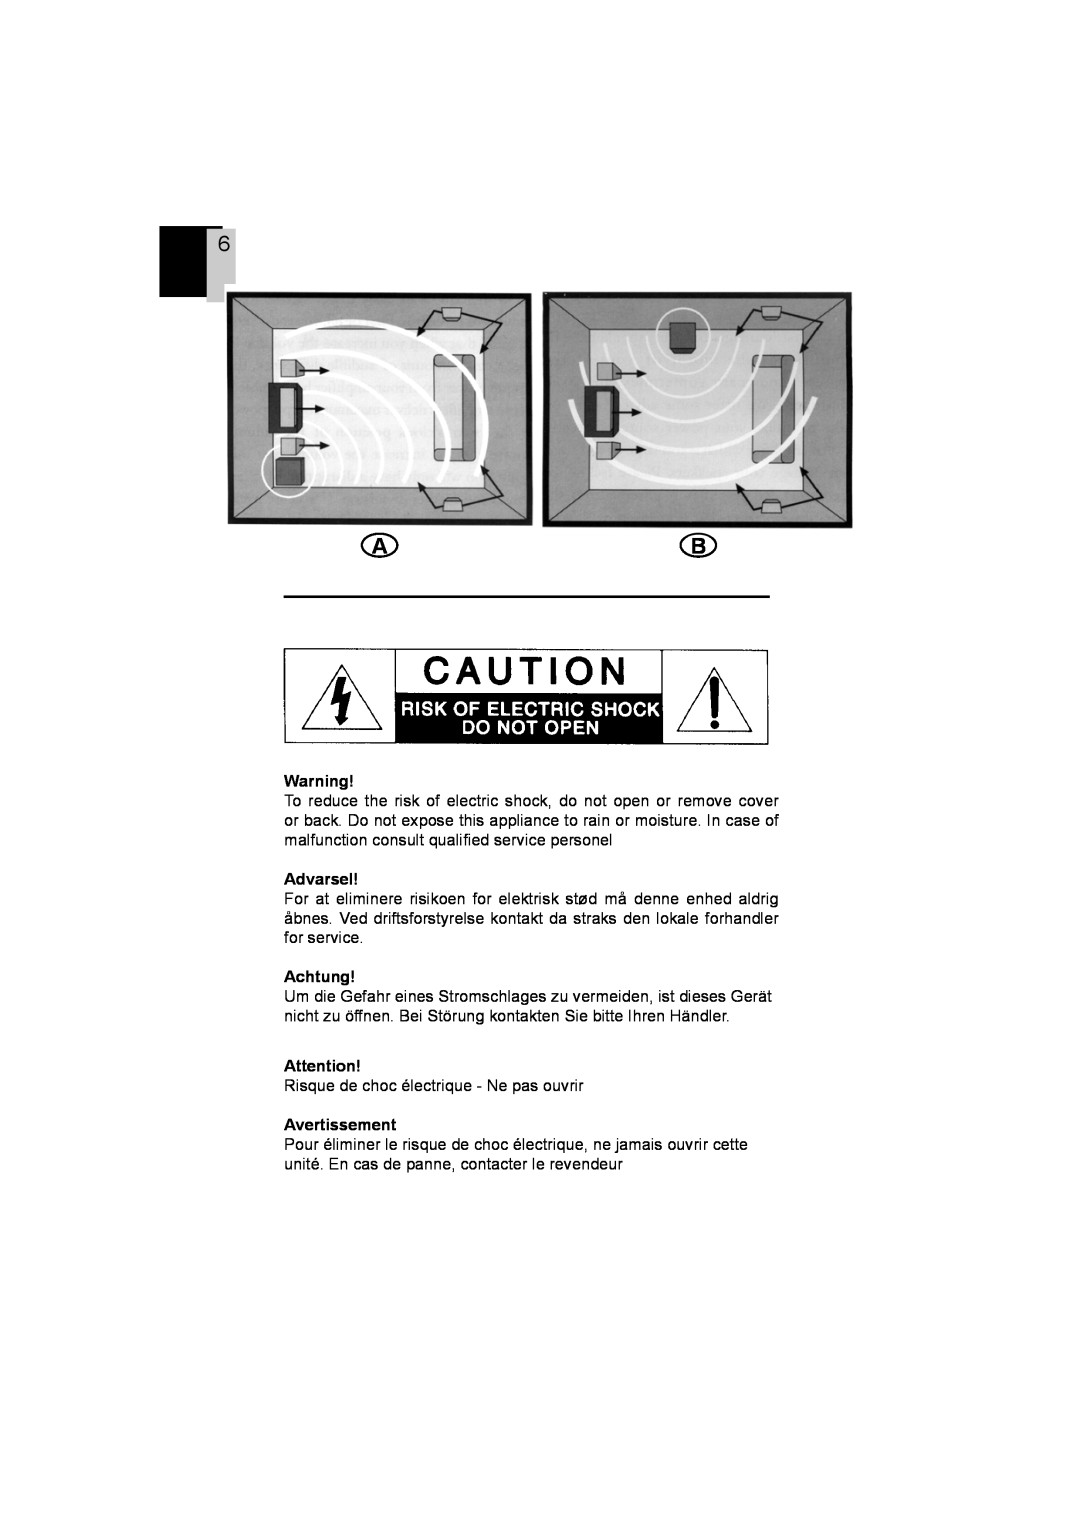 Eltax A-15.2R instruction manual Advarsel, Achtung, Avertissement 